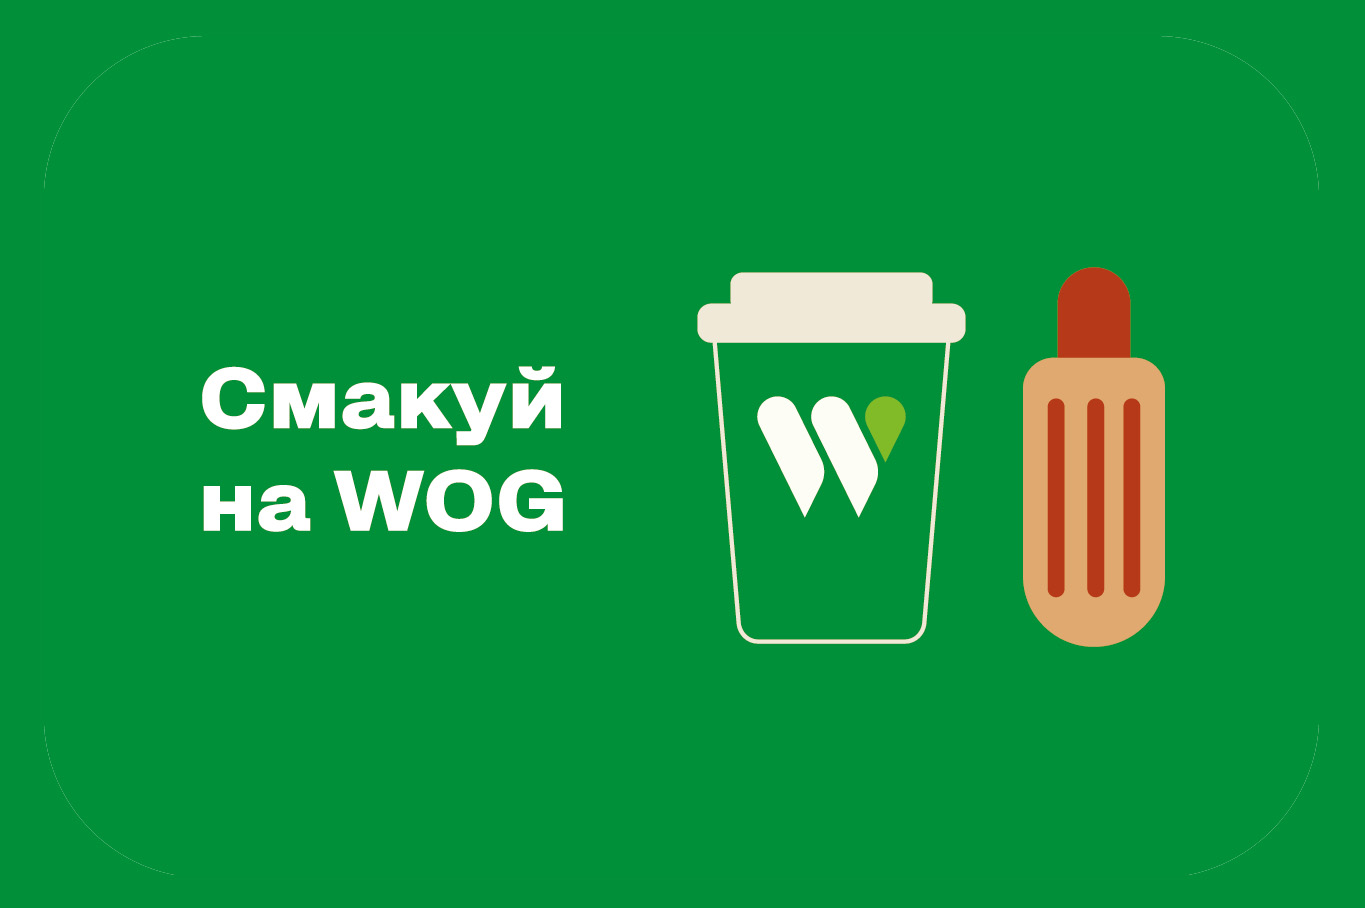 WOG's weekly coffee supply